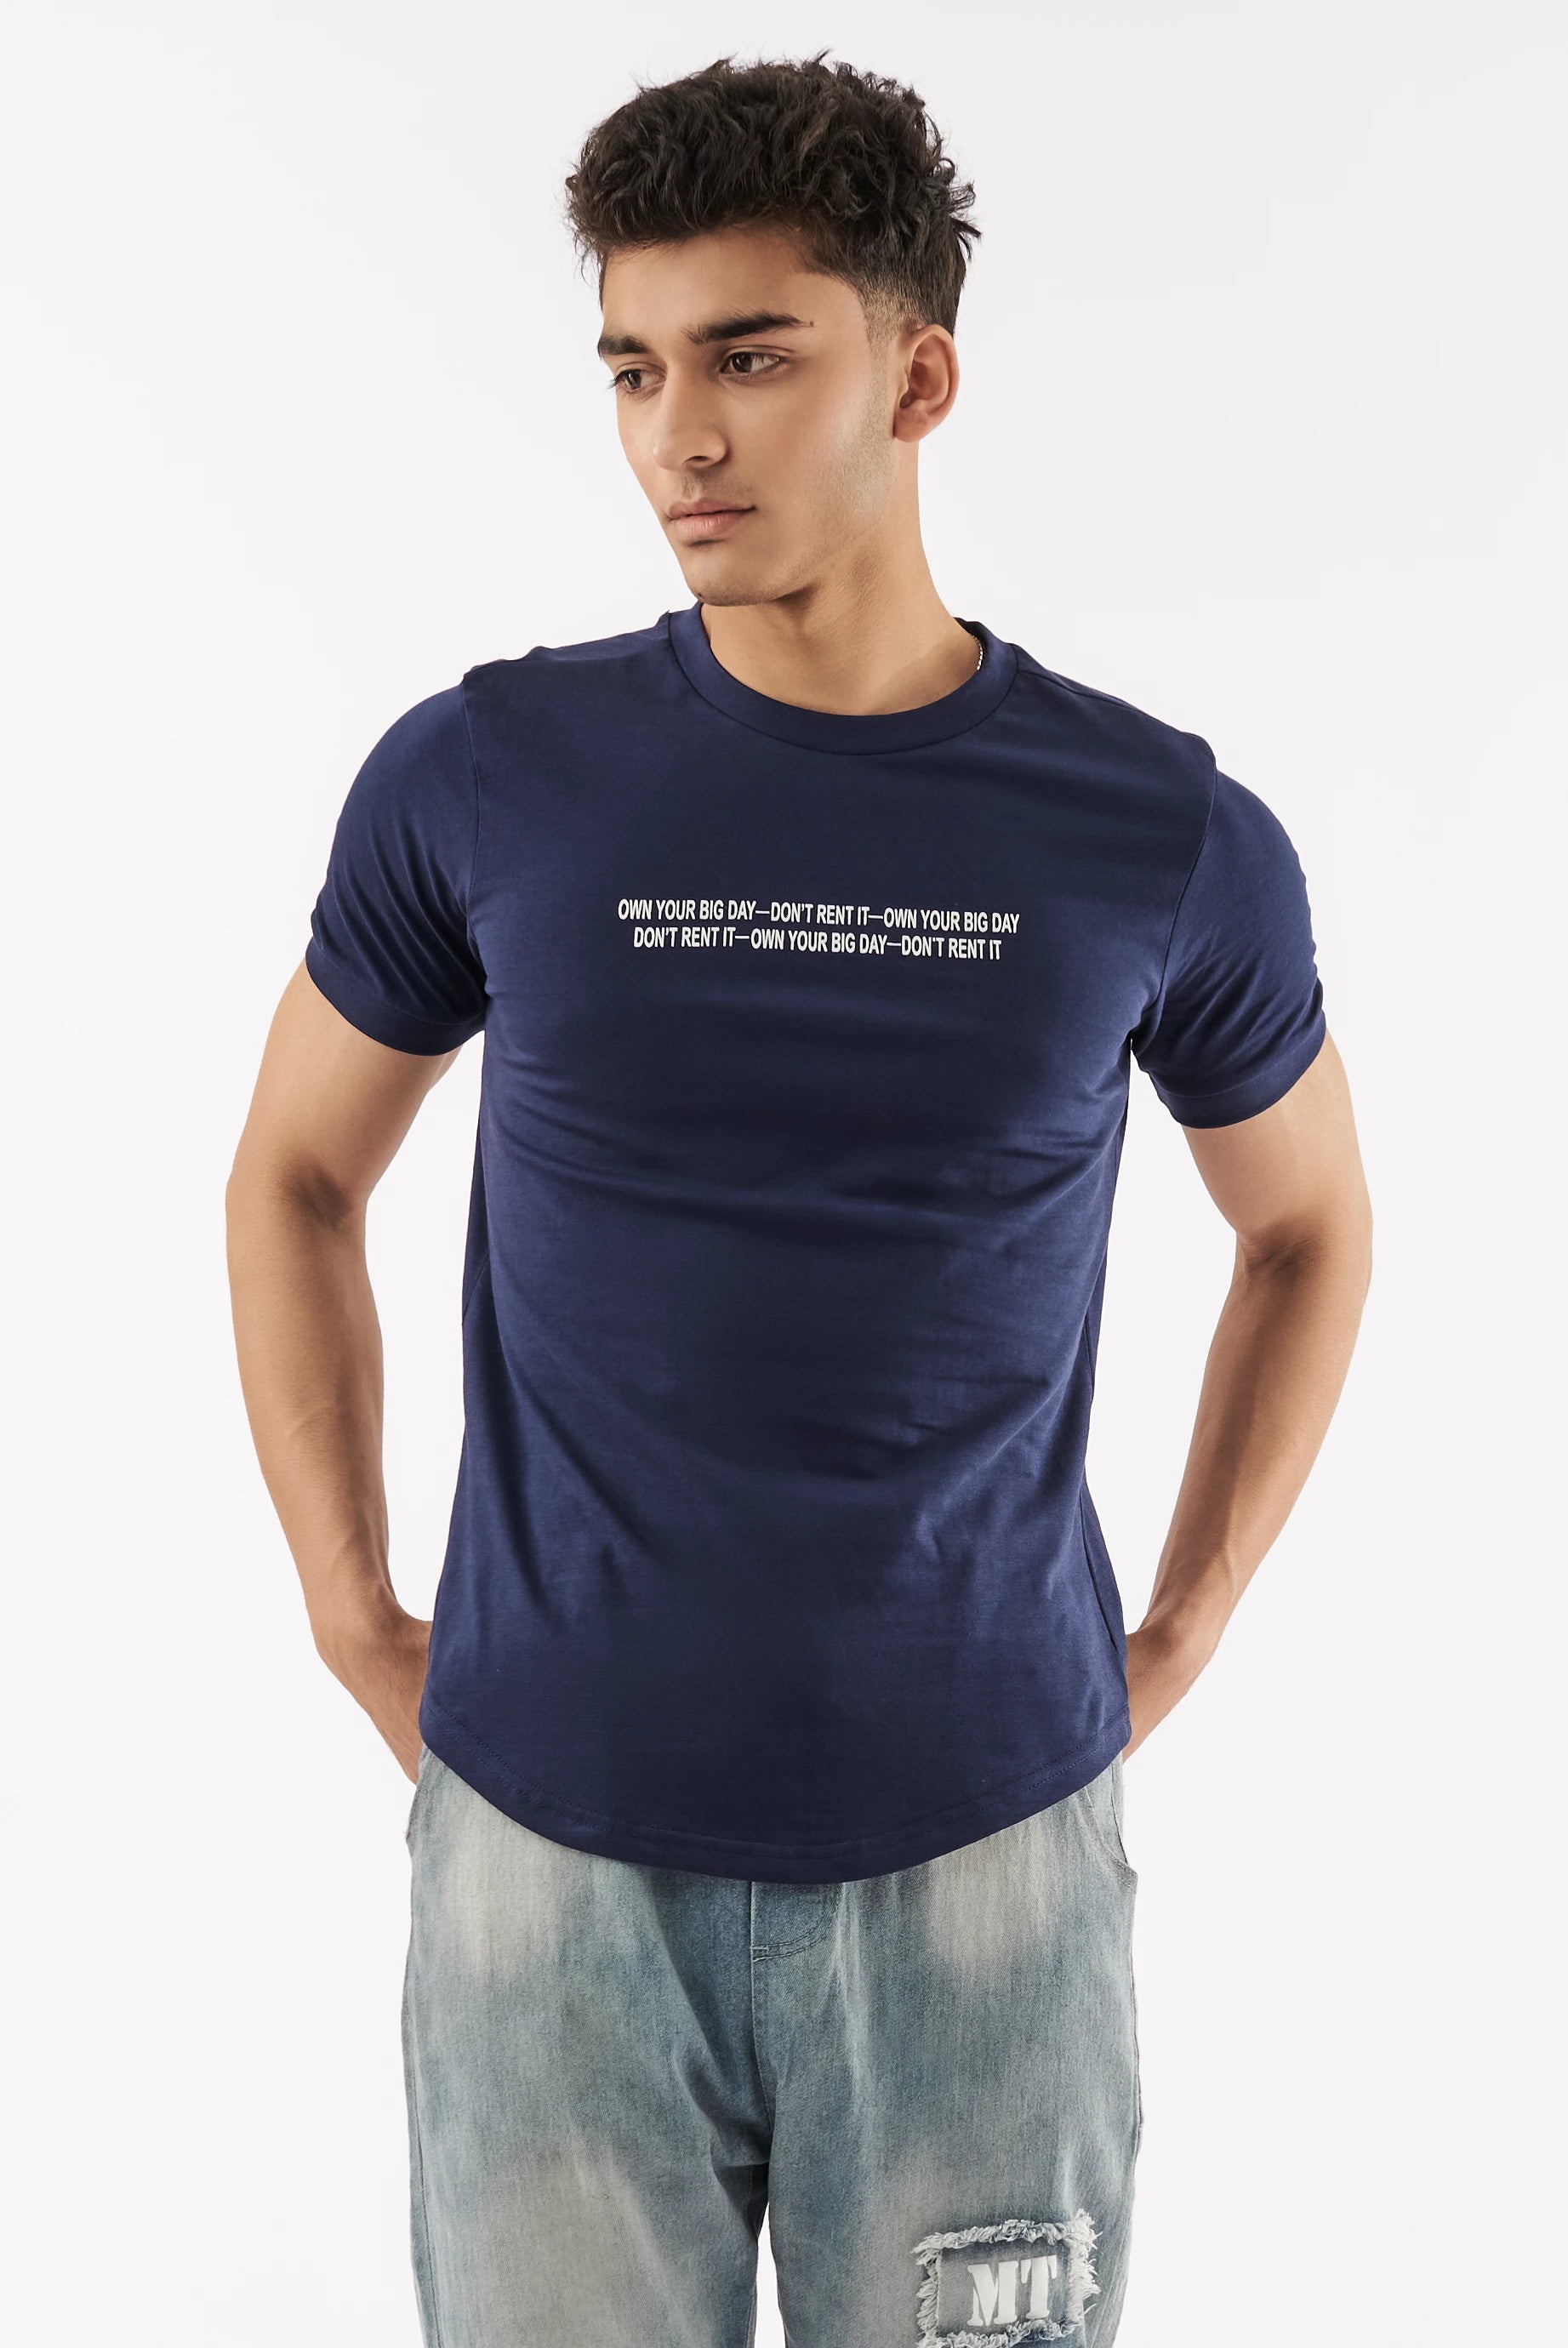 Men's Short-Sleeve T-Shirt Navy